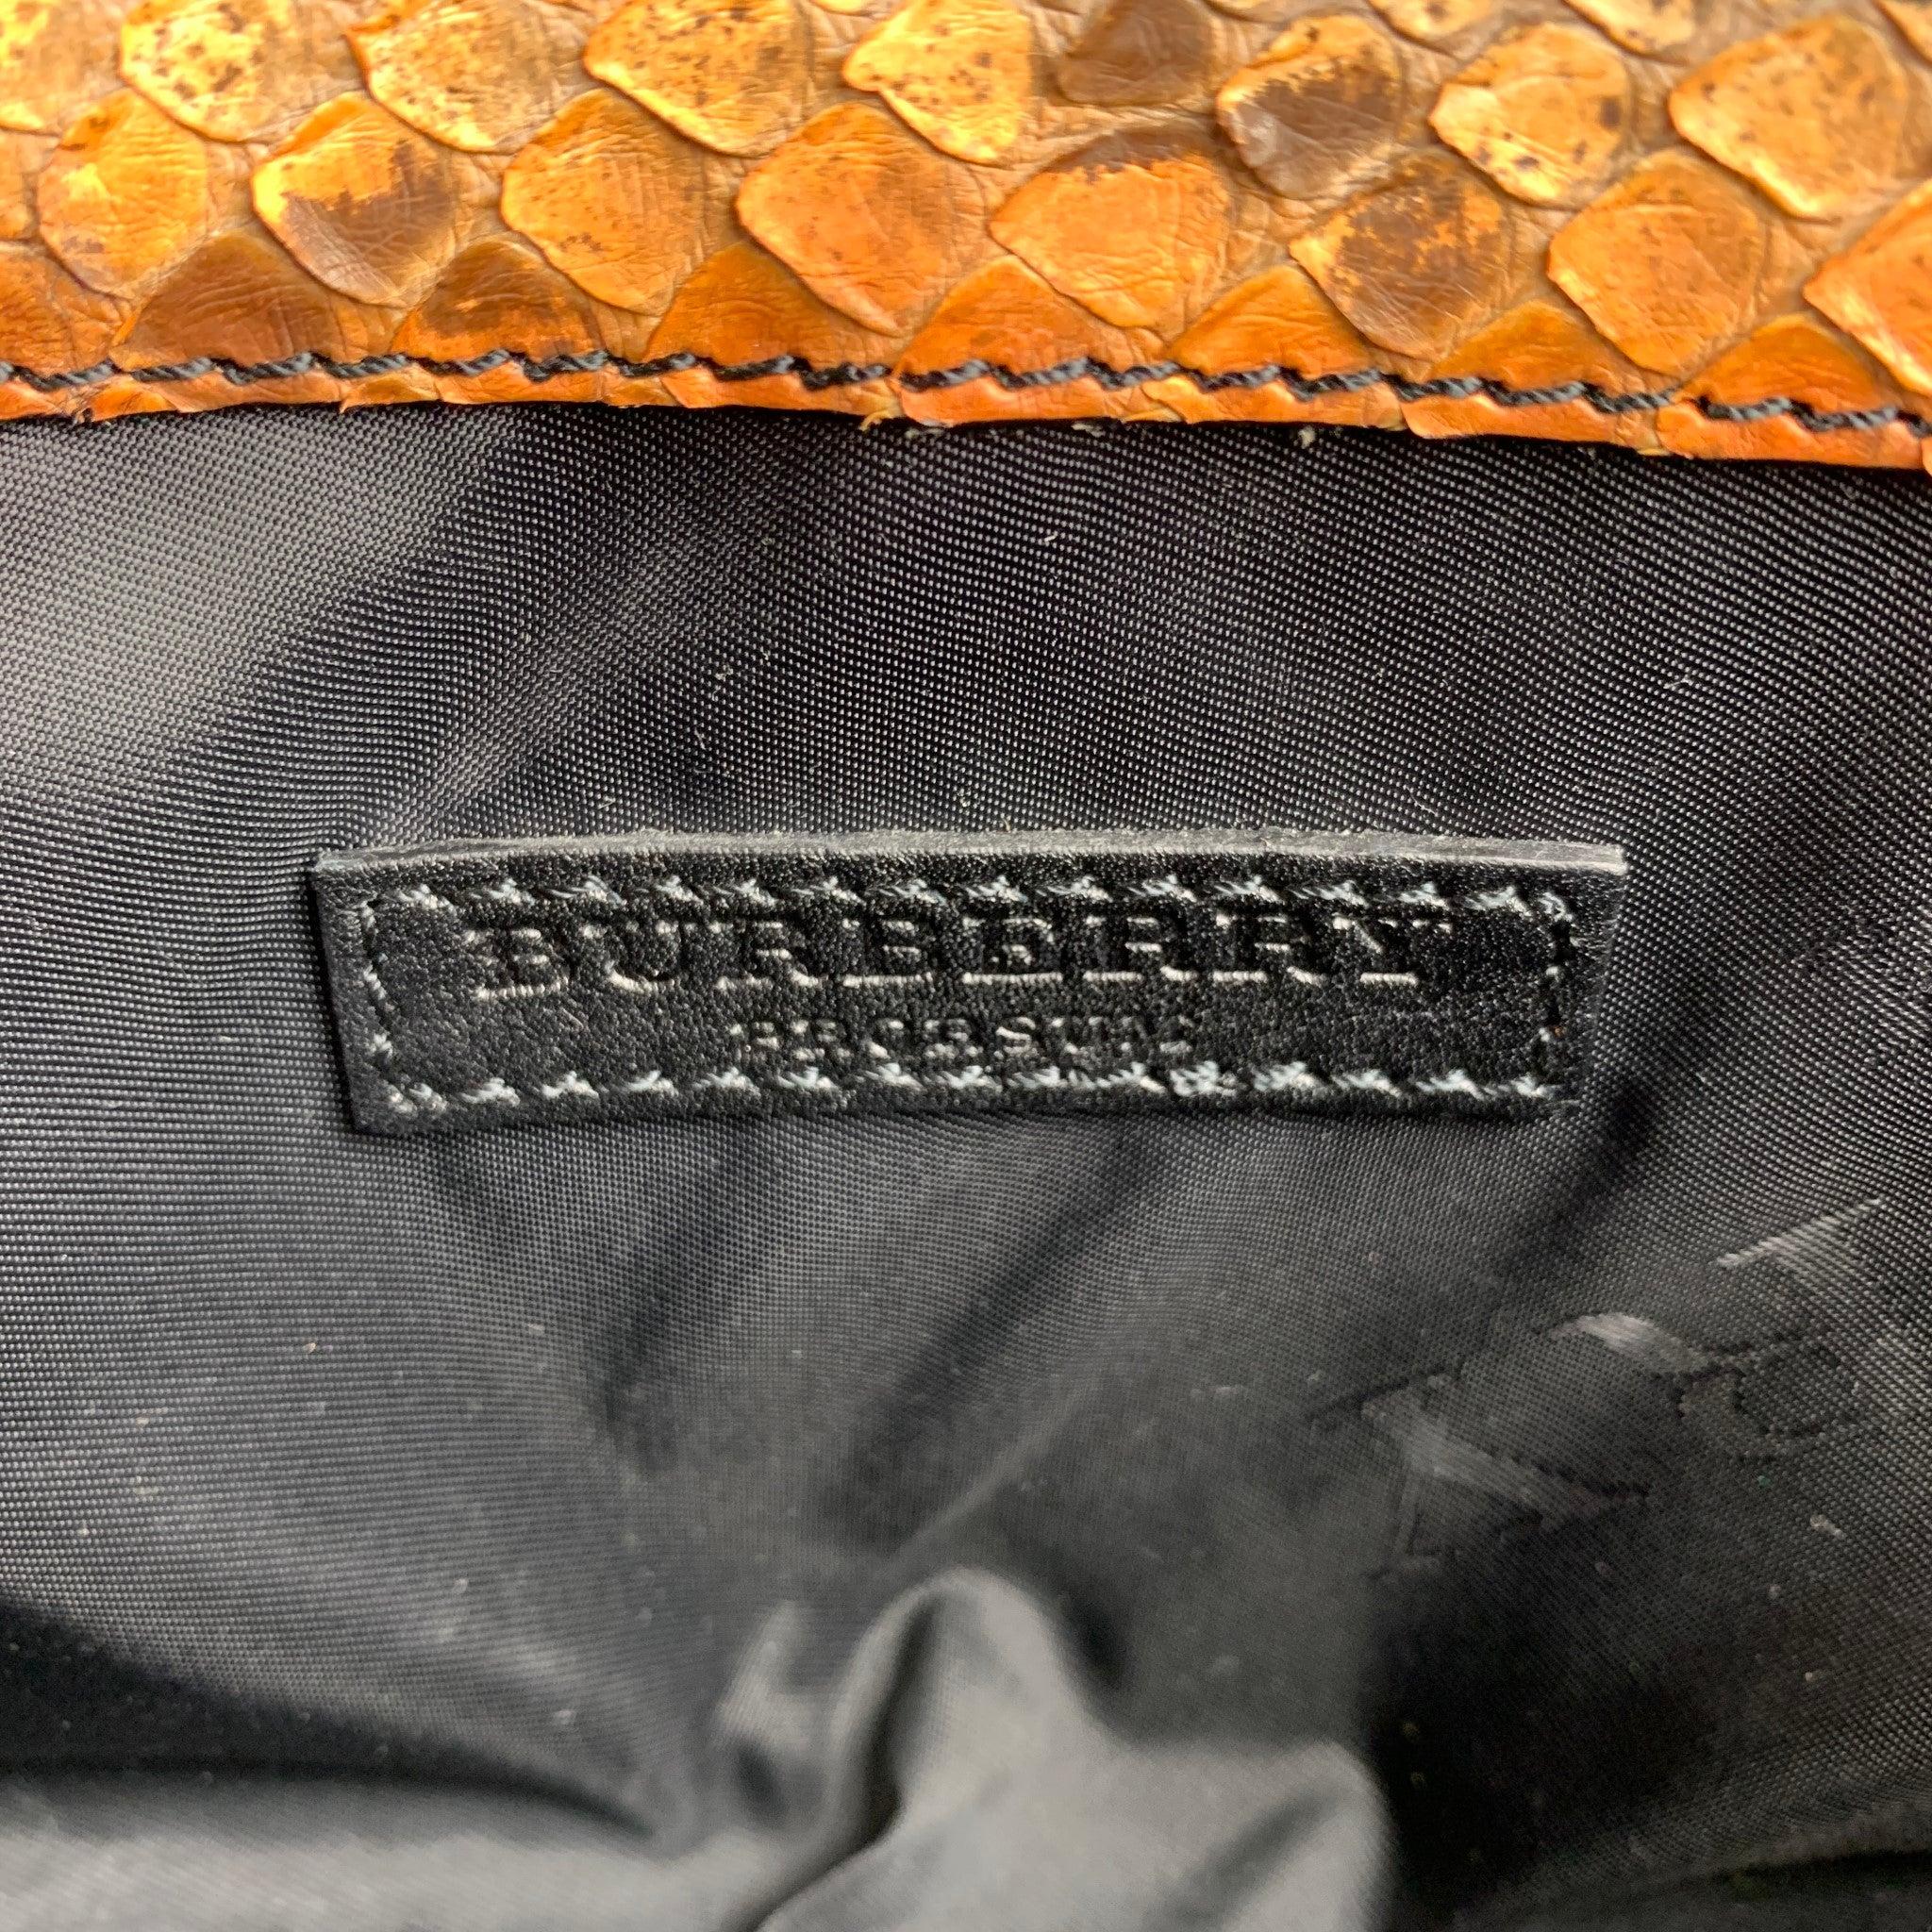 BURBERRY PRORSUM Brown & Tan Python Skin Leather Clutch Shoulder Bag For Sale 5